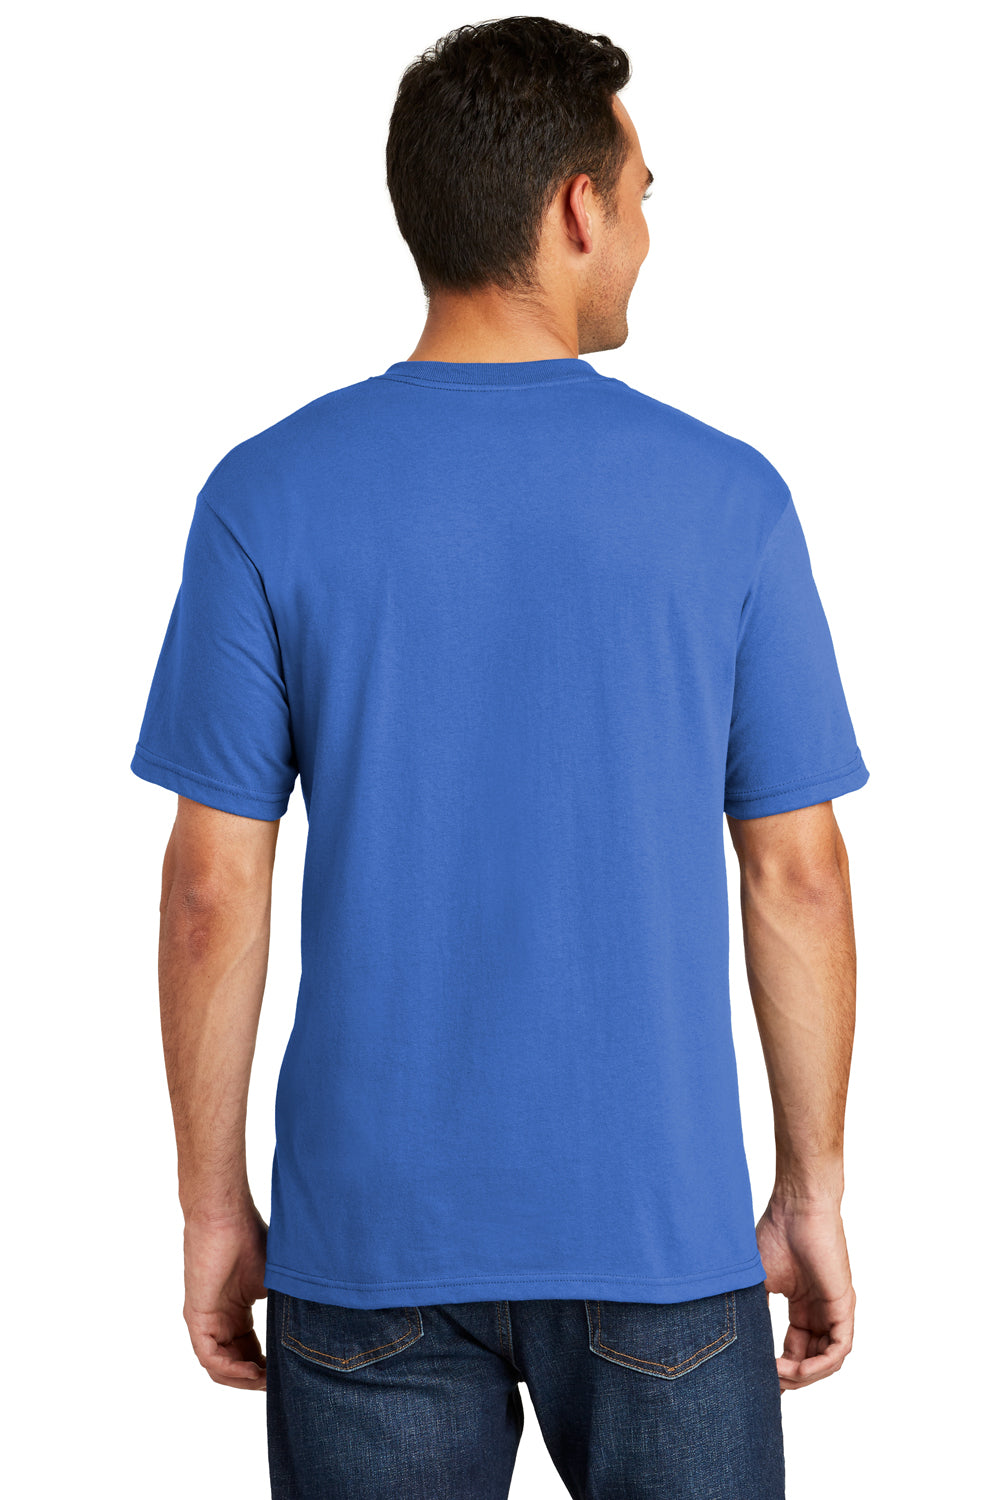 Port & Company USA100 Mens USA Made Short Sleeve Crewneck T-Shirt Royal Blue Back